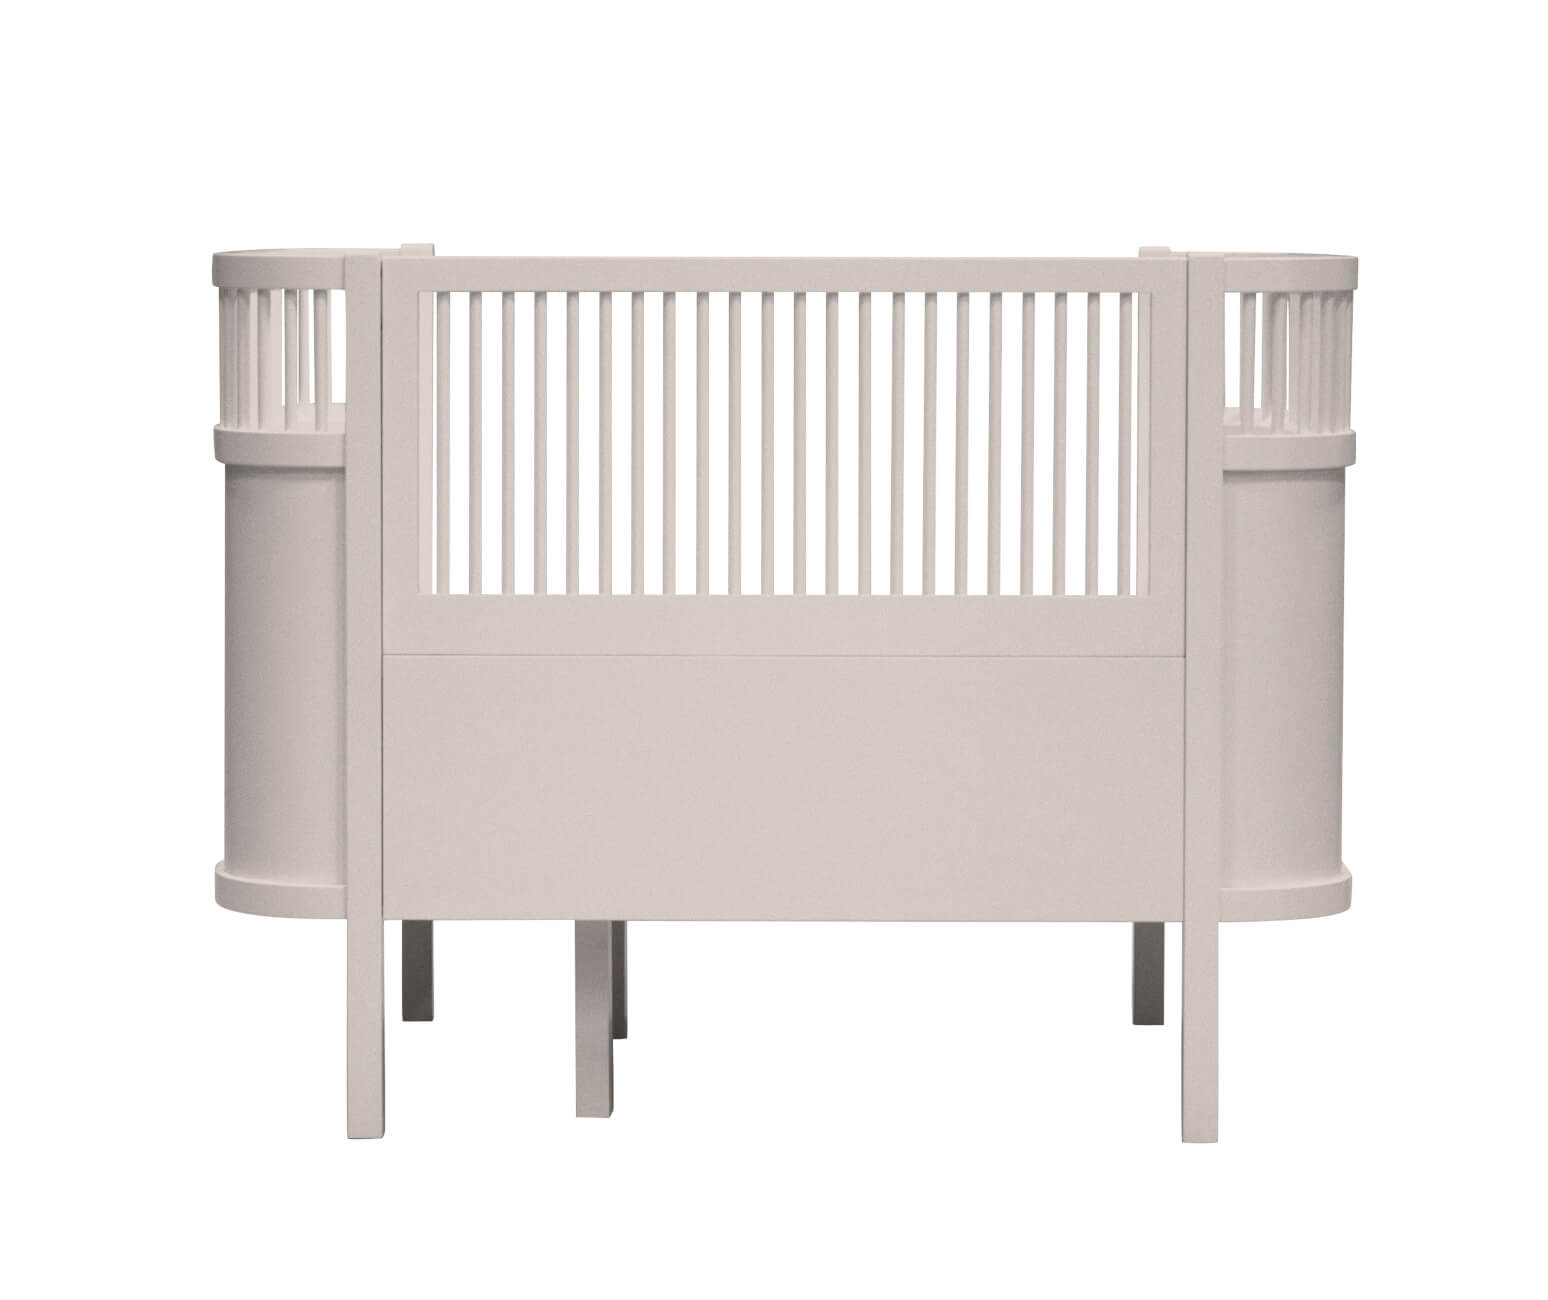 Sebra Das Sebra Bett Baby Junior Beige 2001202 Design Möbel